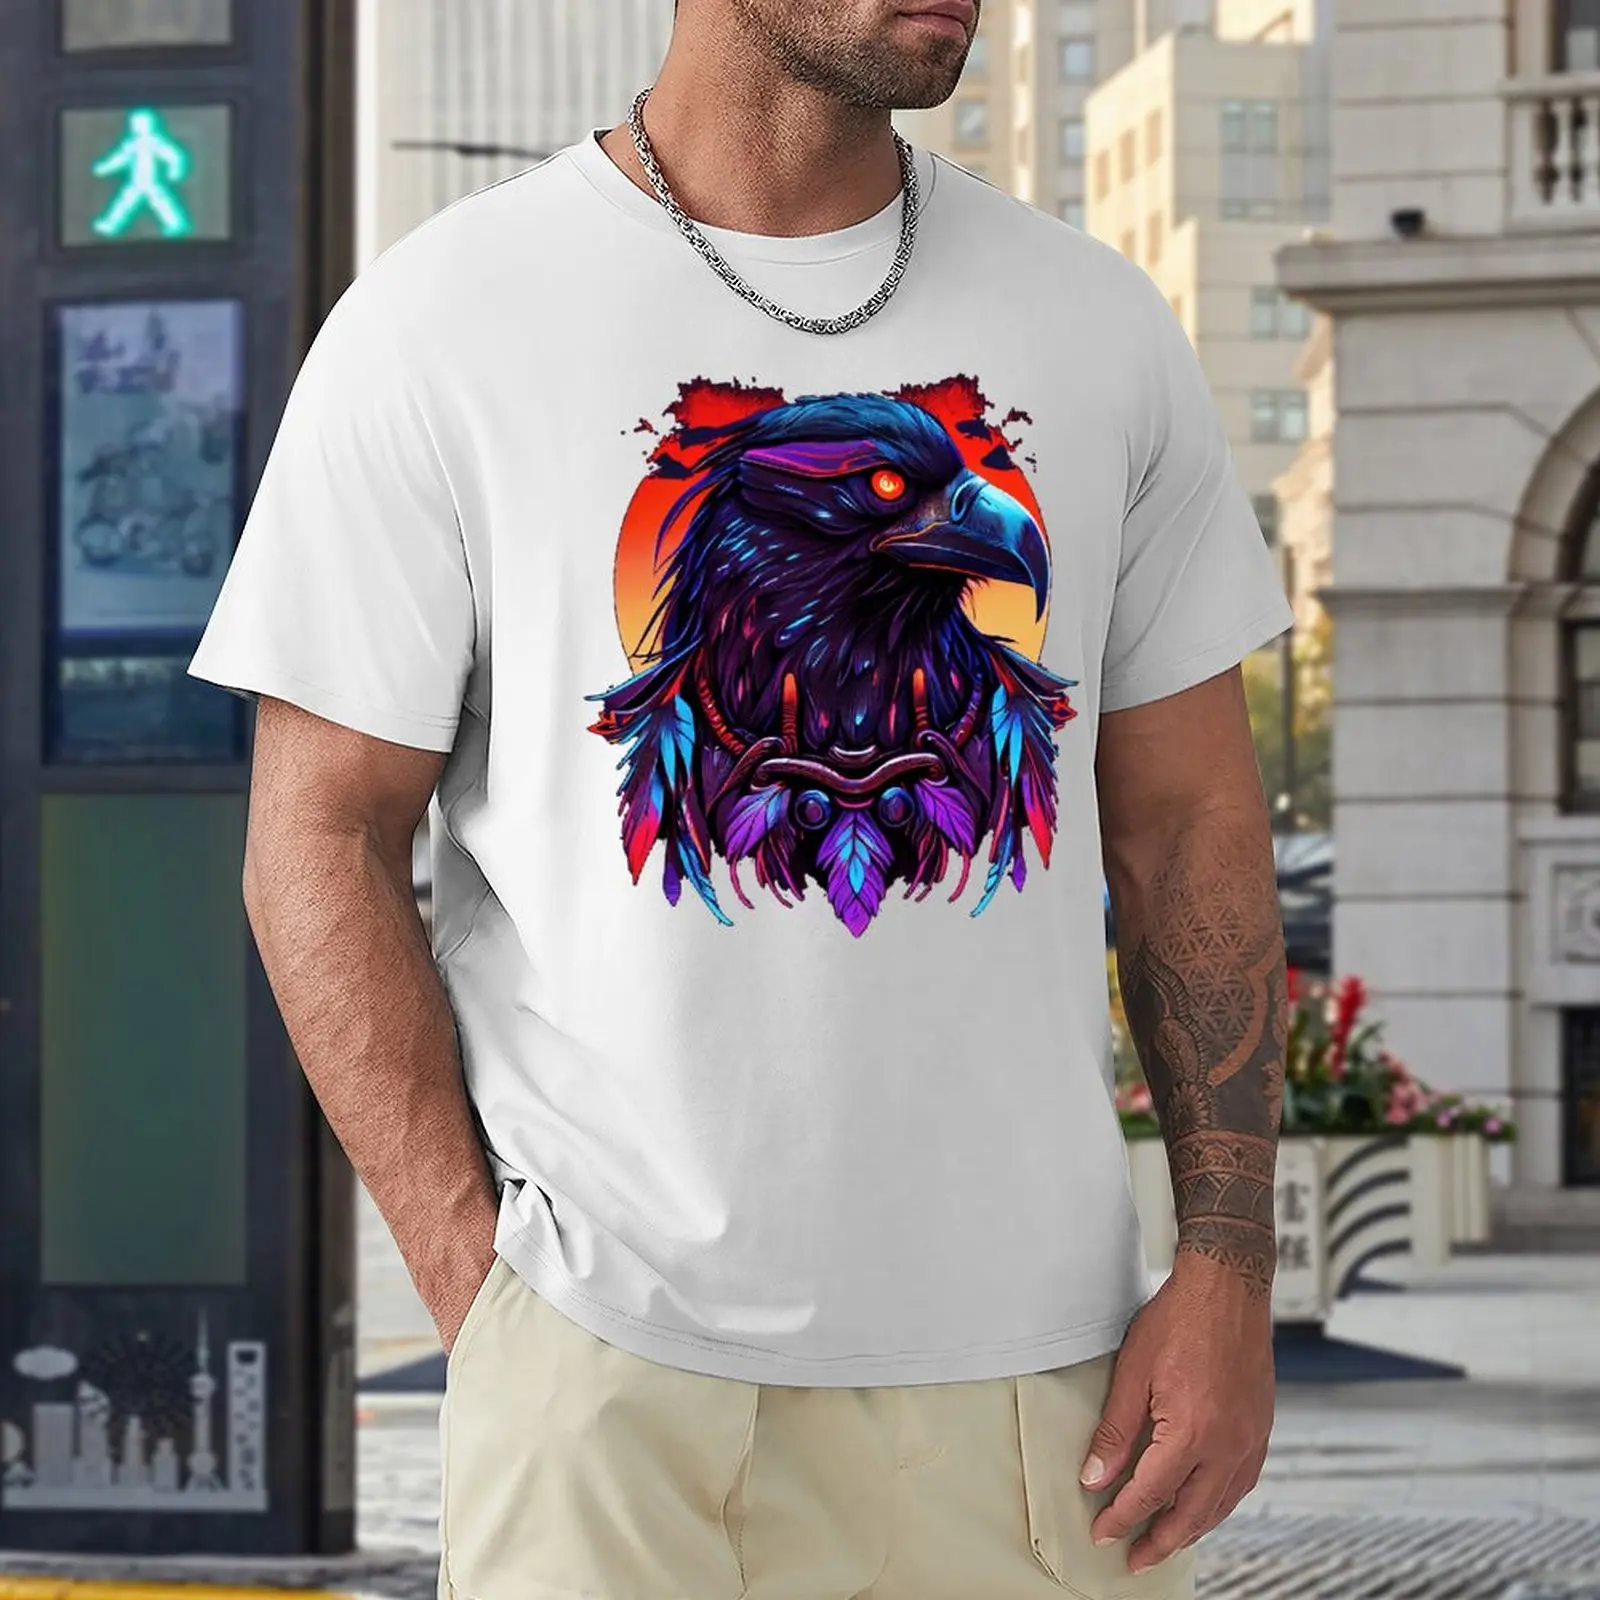 

Футболка Synthwave с рисунком ворона, черепа, демона, убийца 11, забавная футболка с графическим рисунком, с круглым вырезом, Move Geeky Home, американский размер